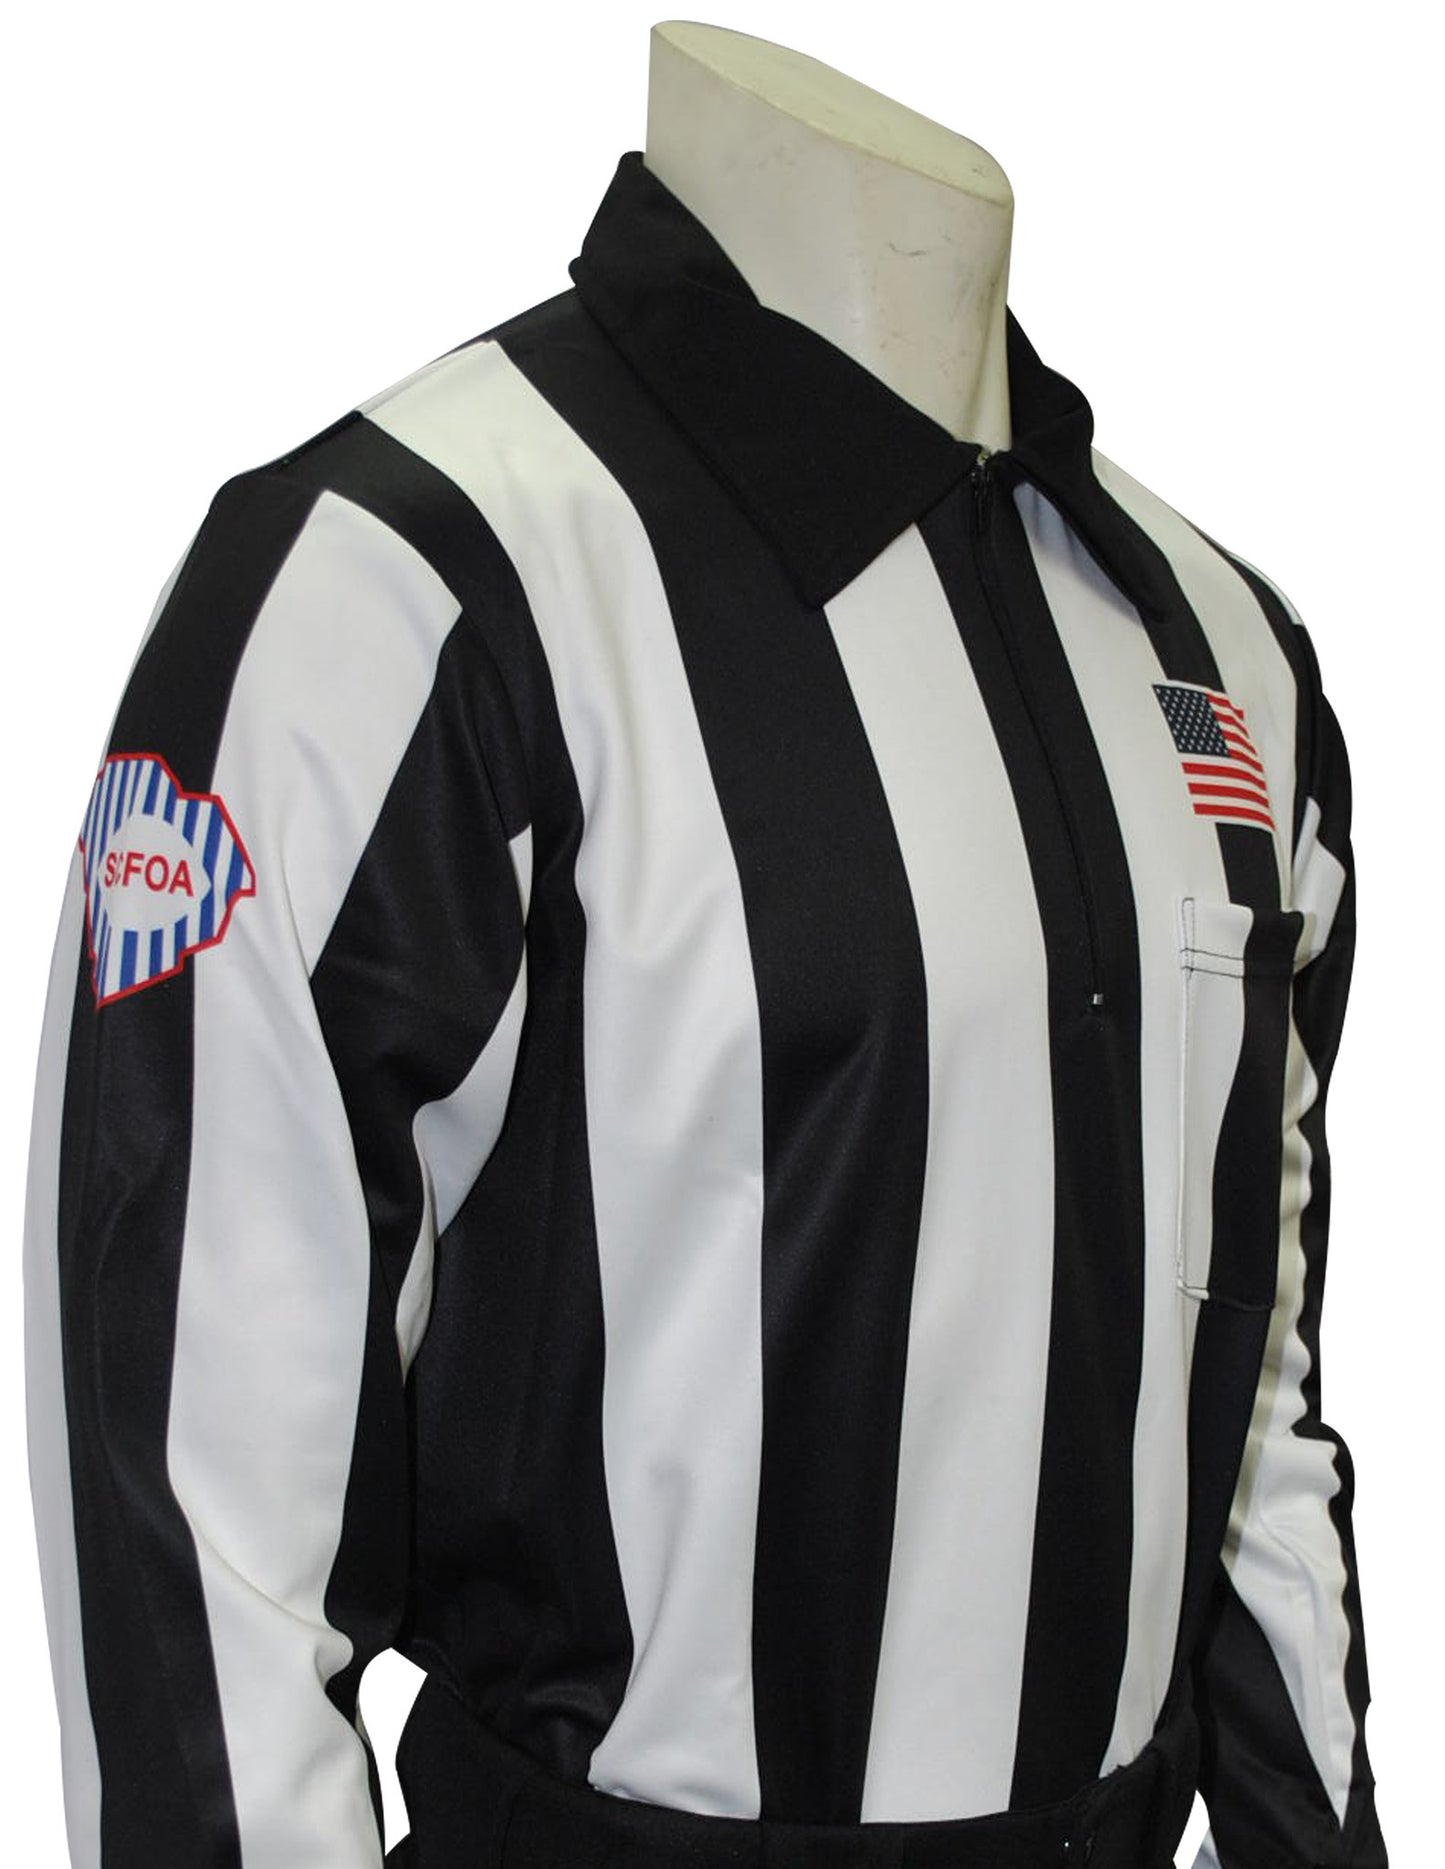 USA160SC- Smitty USA - Dye Sub South Carolina Football Long Sleeve Shirt